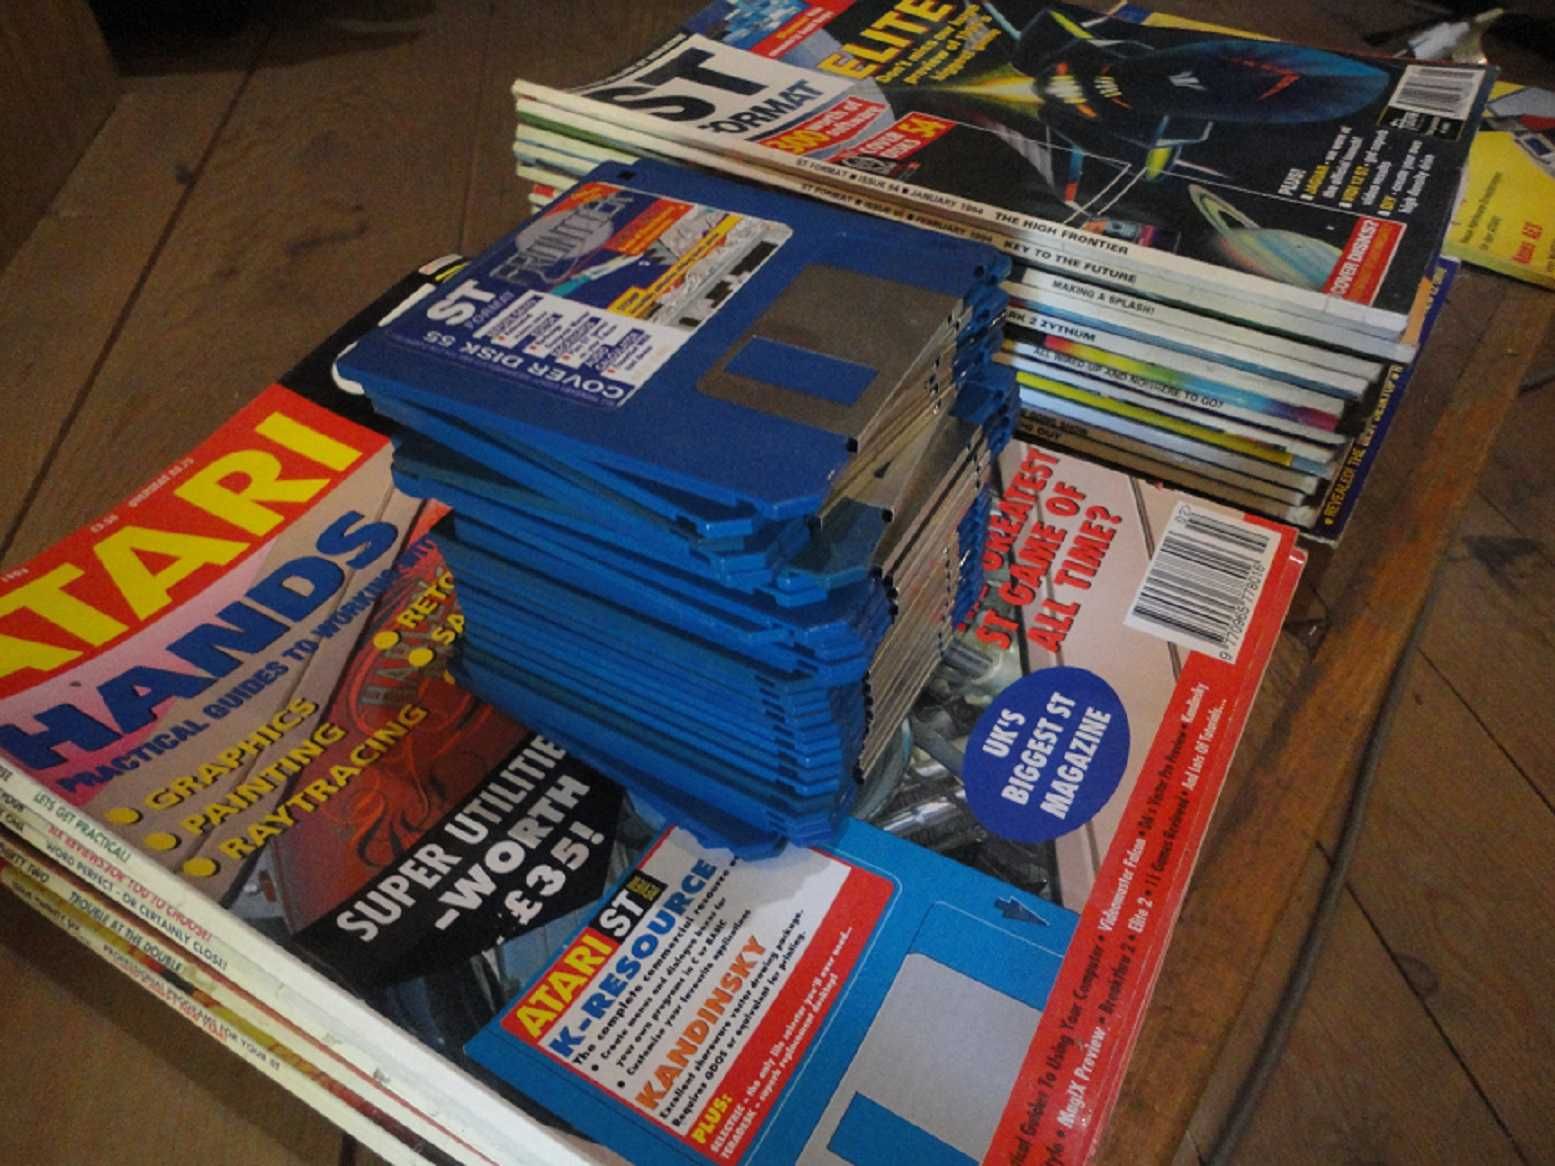 33 revistas Atari com Disketes